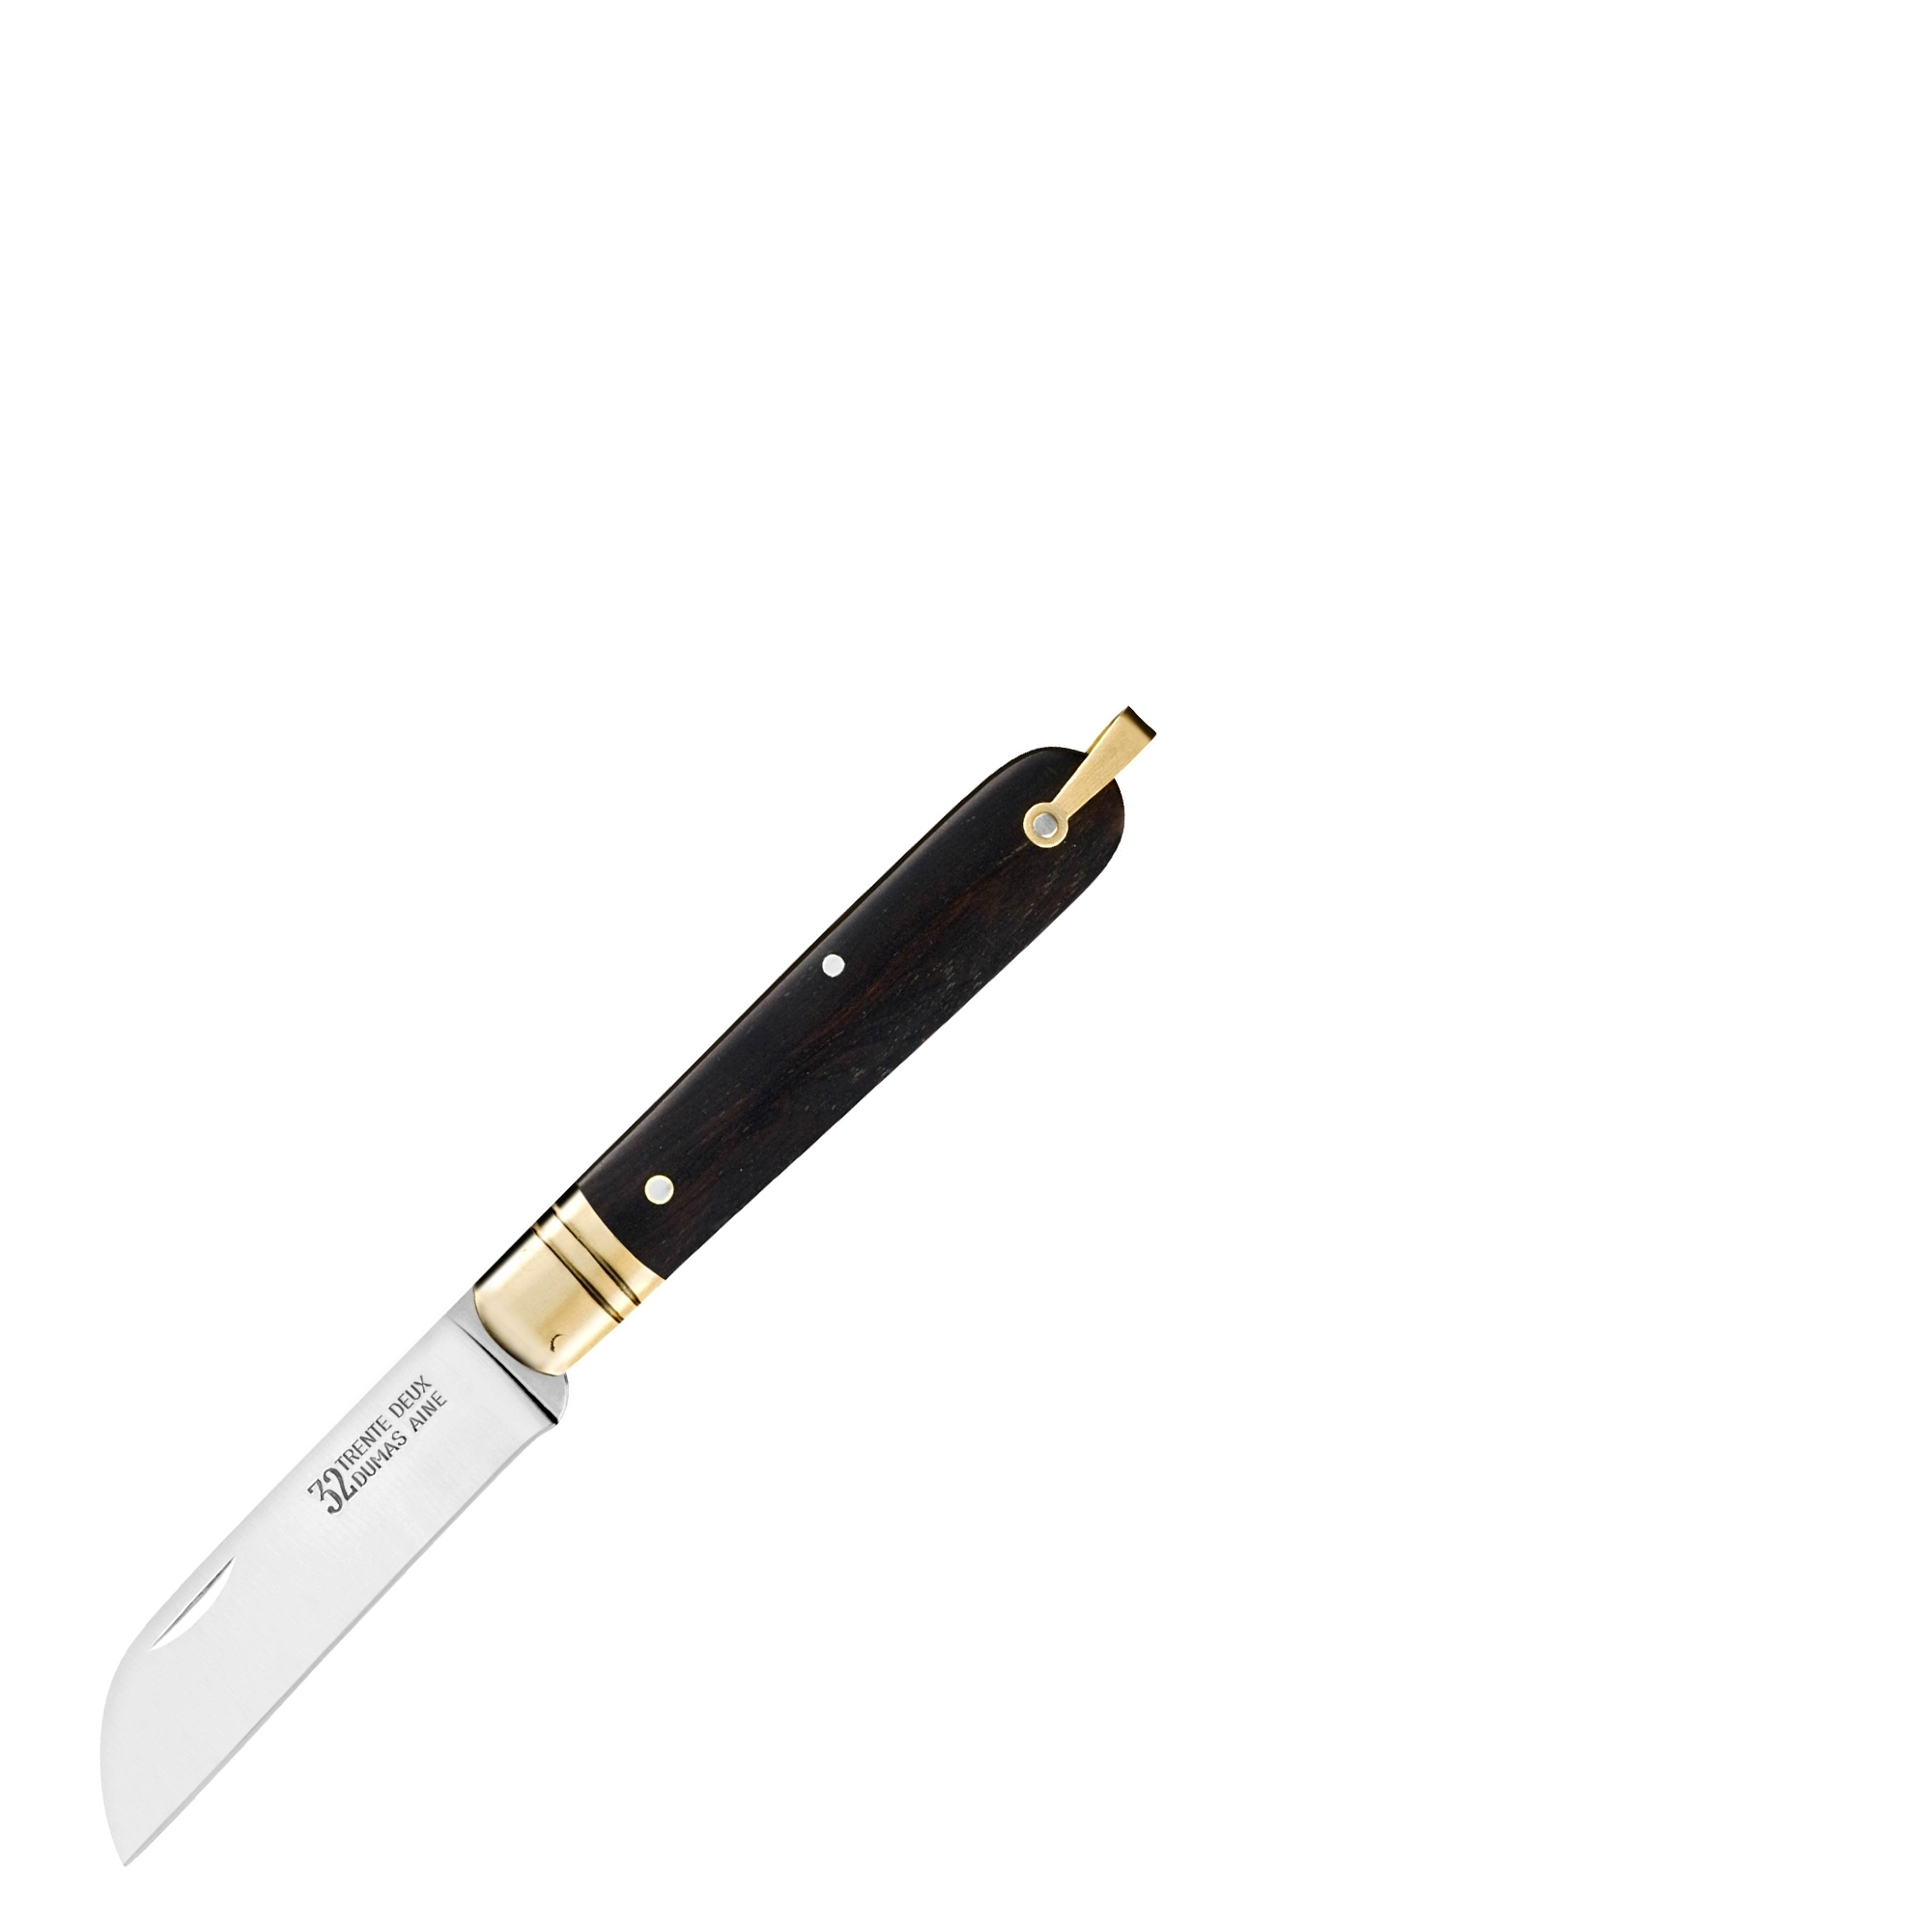 Sabatier - Pocket knife - Brass head